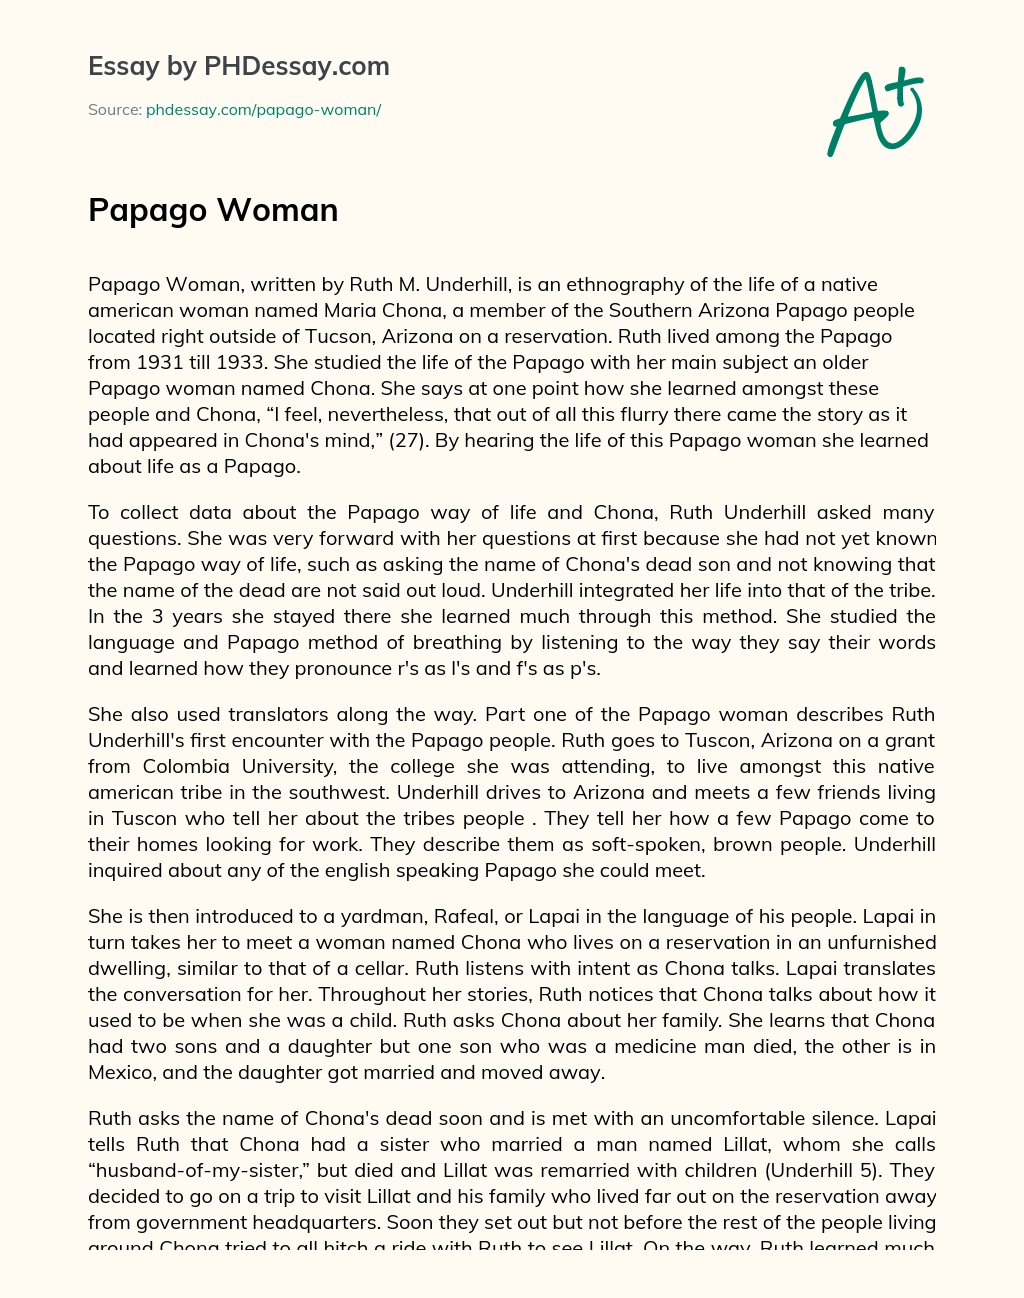 Papago Woman essay